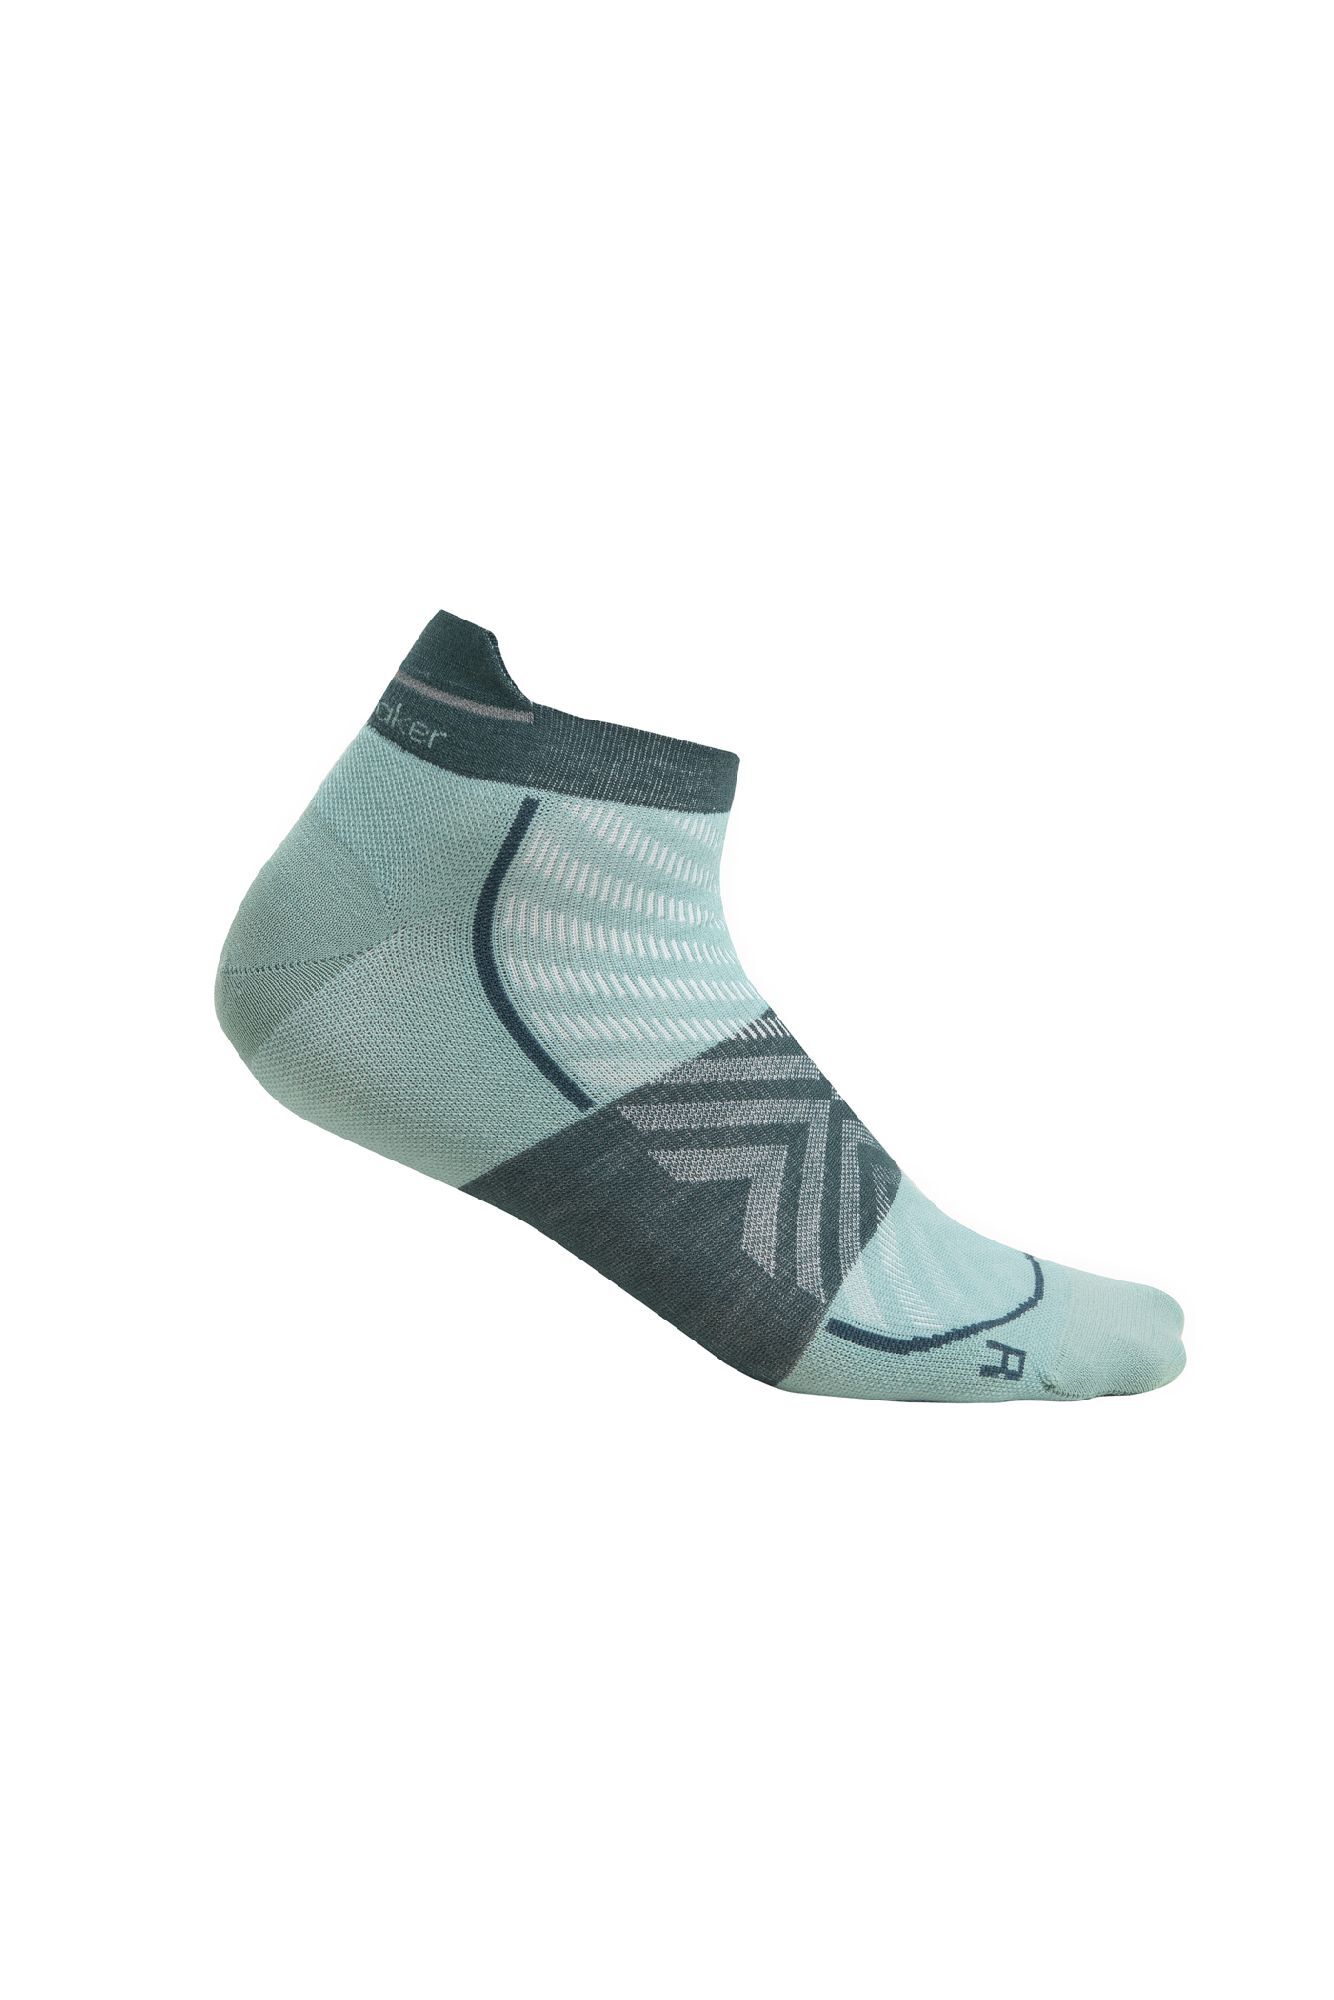 Icebreaker Run+ Ultralight Micro - Merino socks - Men's I Hardloop